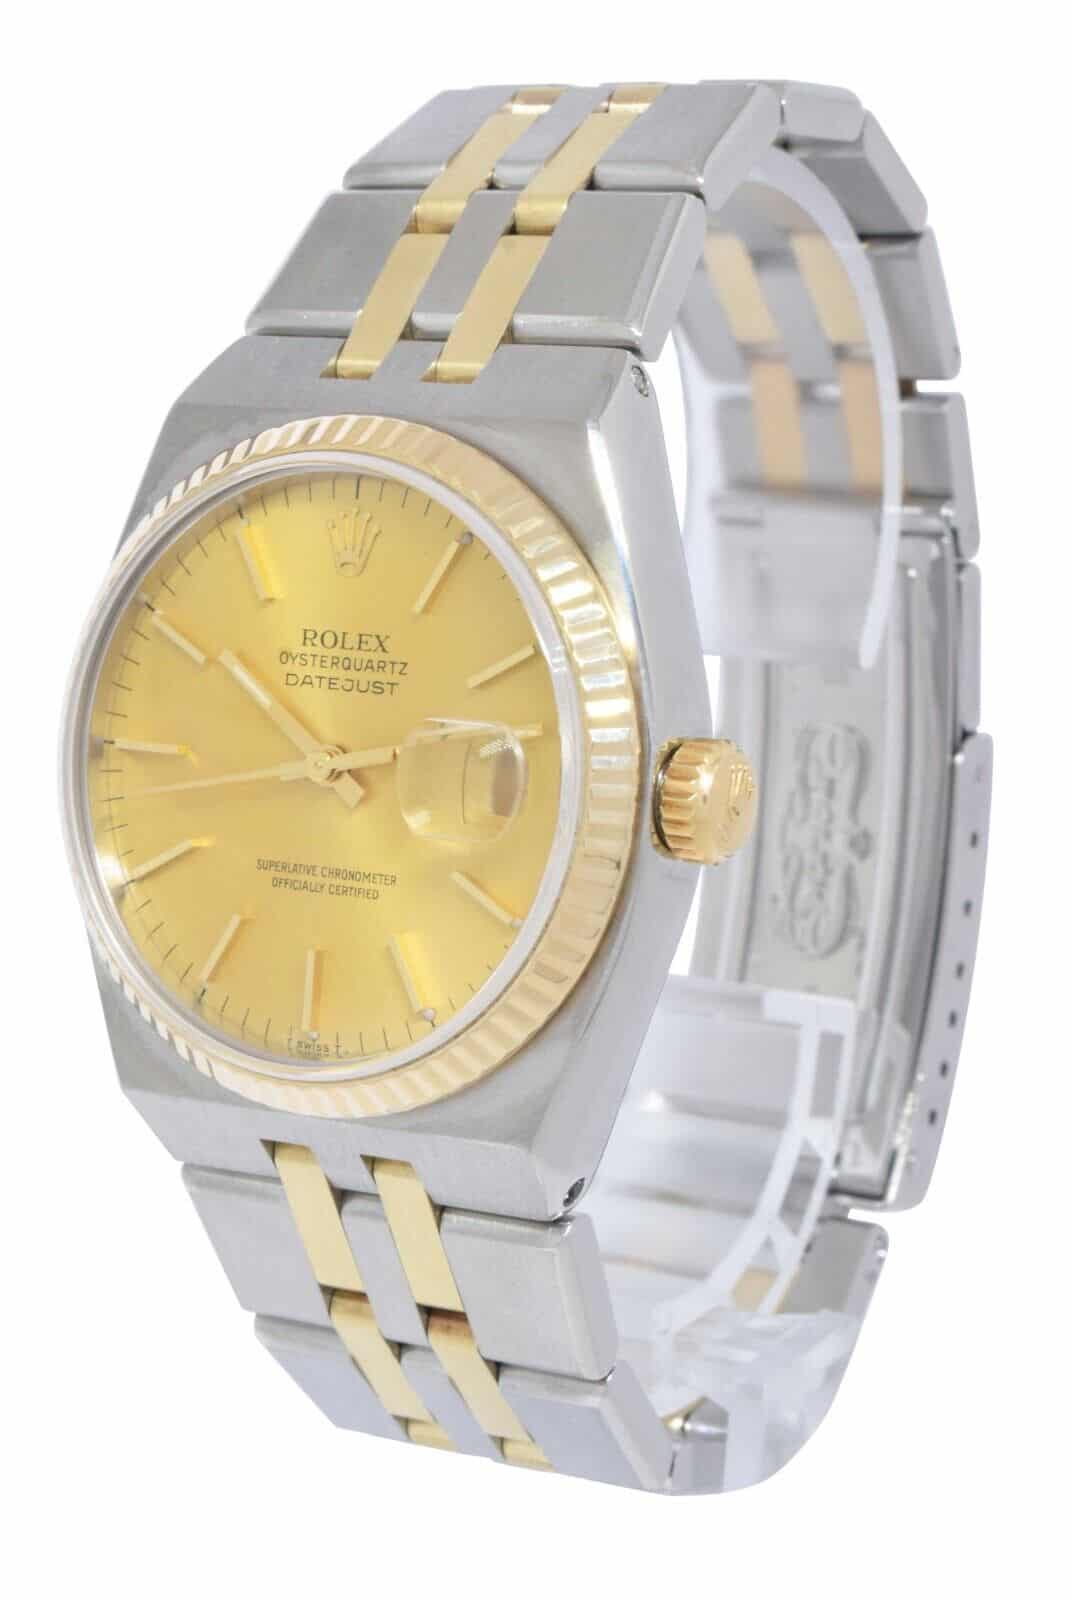 Rolex Datejust Oysterquartz 14k Yellow Gold/Steel Champagne 36mm Watch '79 17013